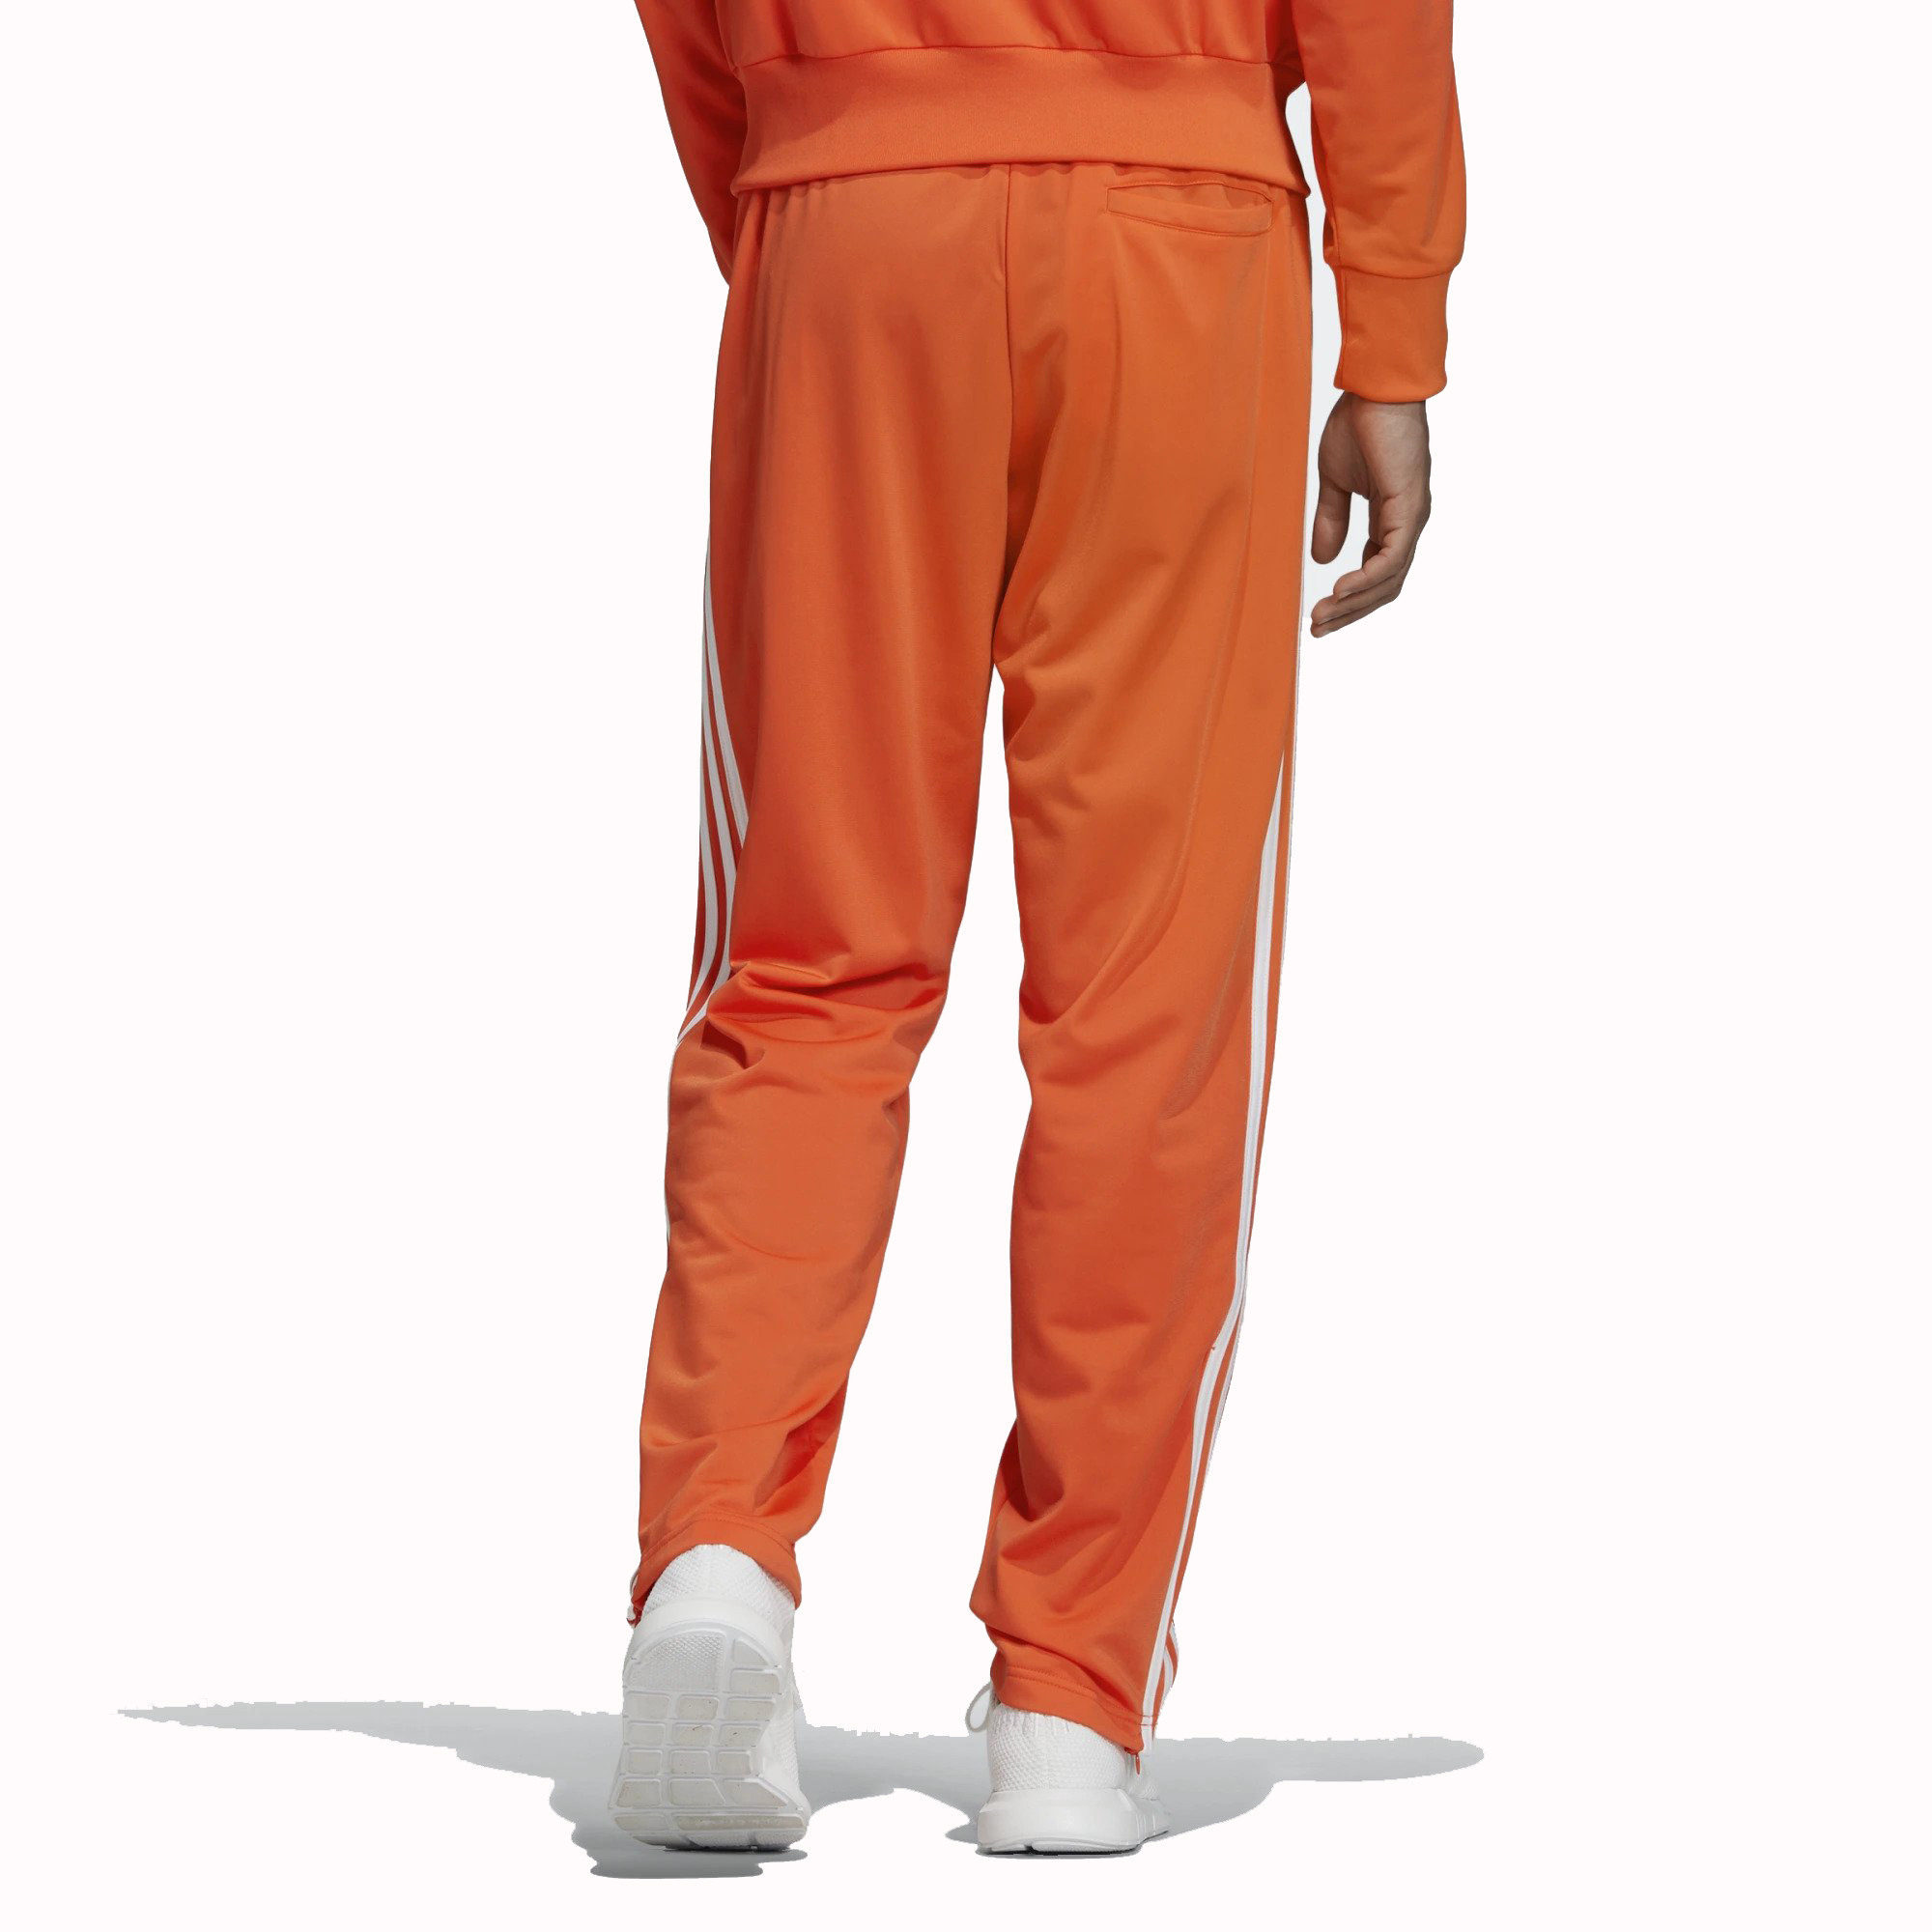 Adidas Men's Originals Firebird Track Pants Orange ED7015 | eBay